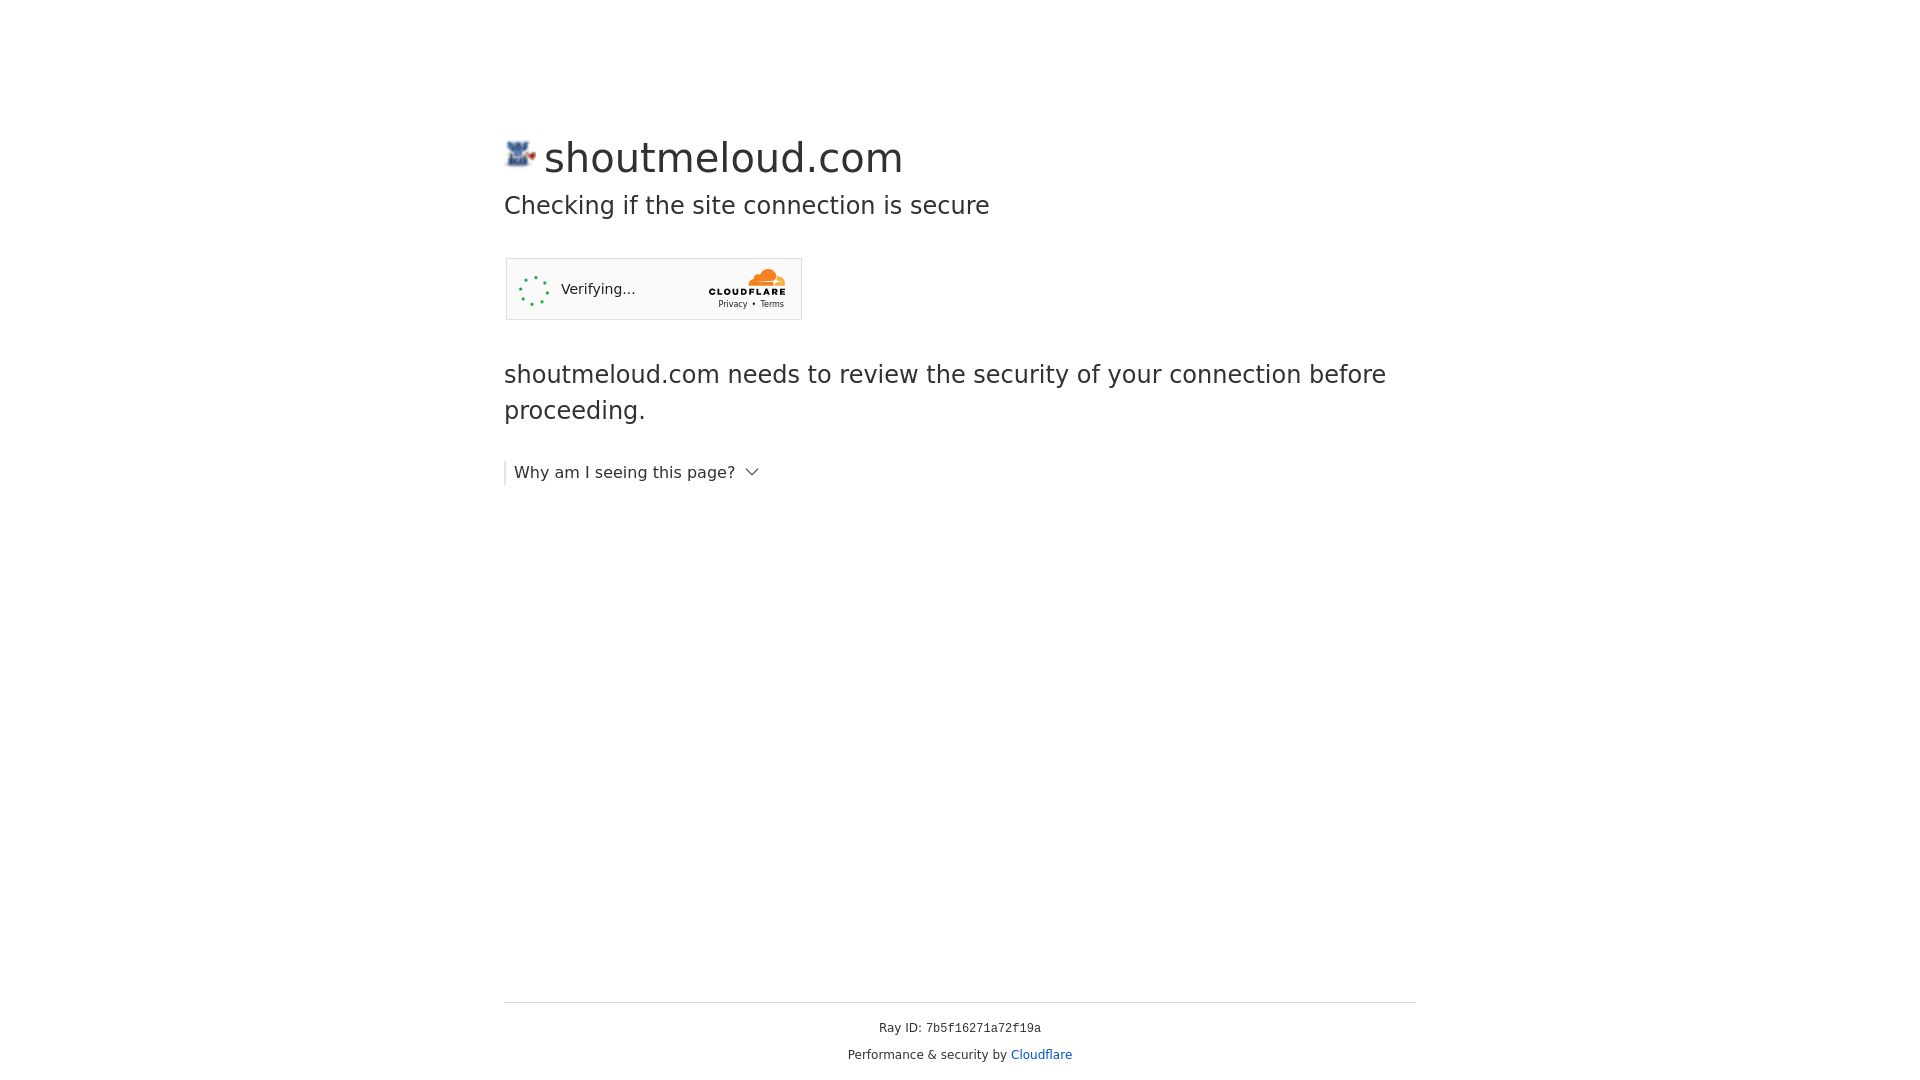 Website status shoutmeloud.com is   ONLINE